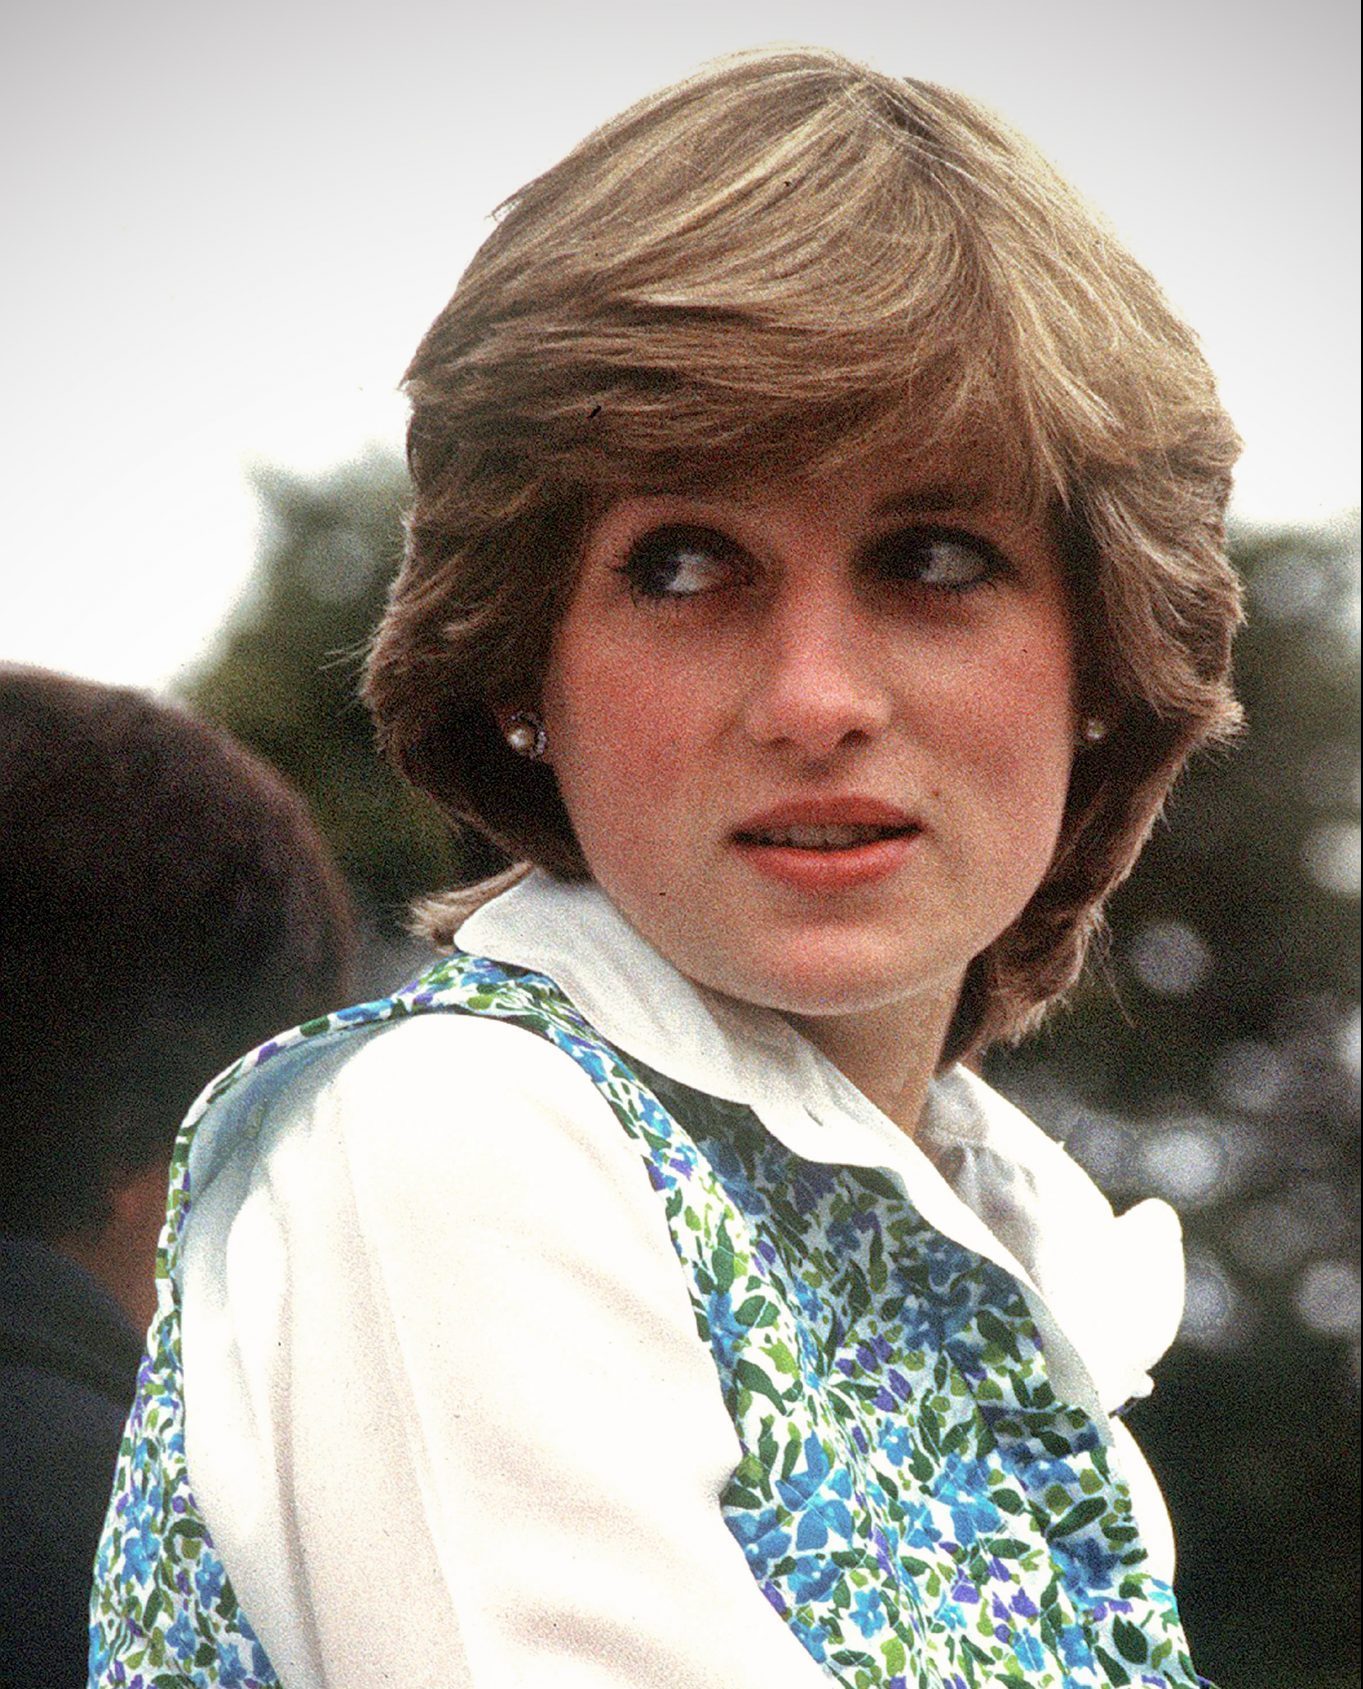 Photos of Young Princess Diana | Reader's Digest Canada